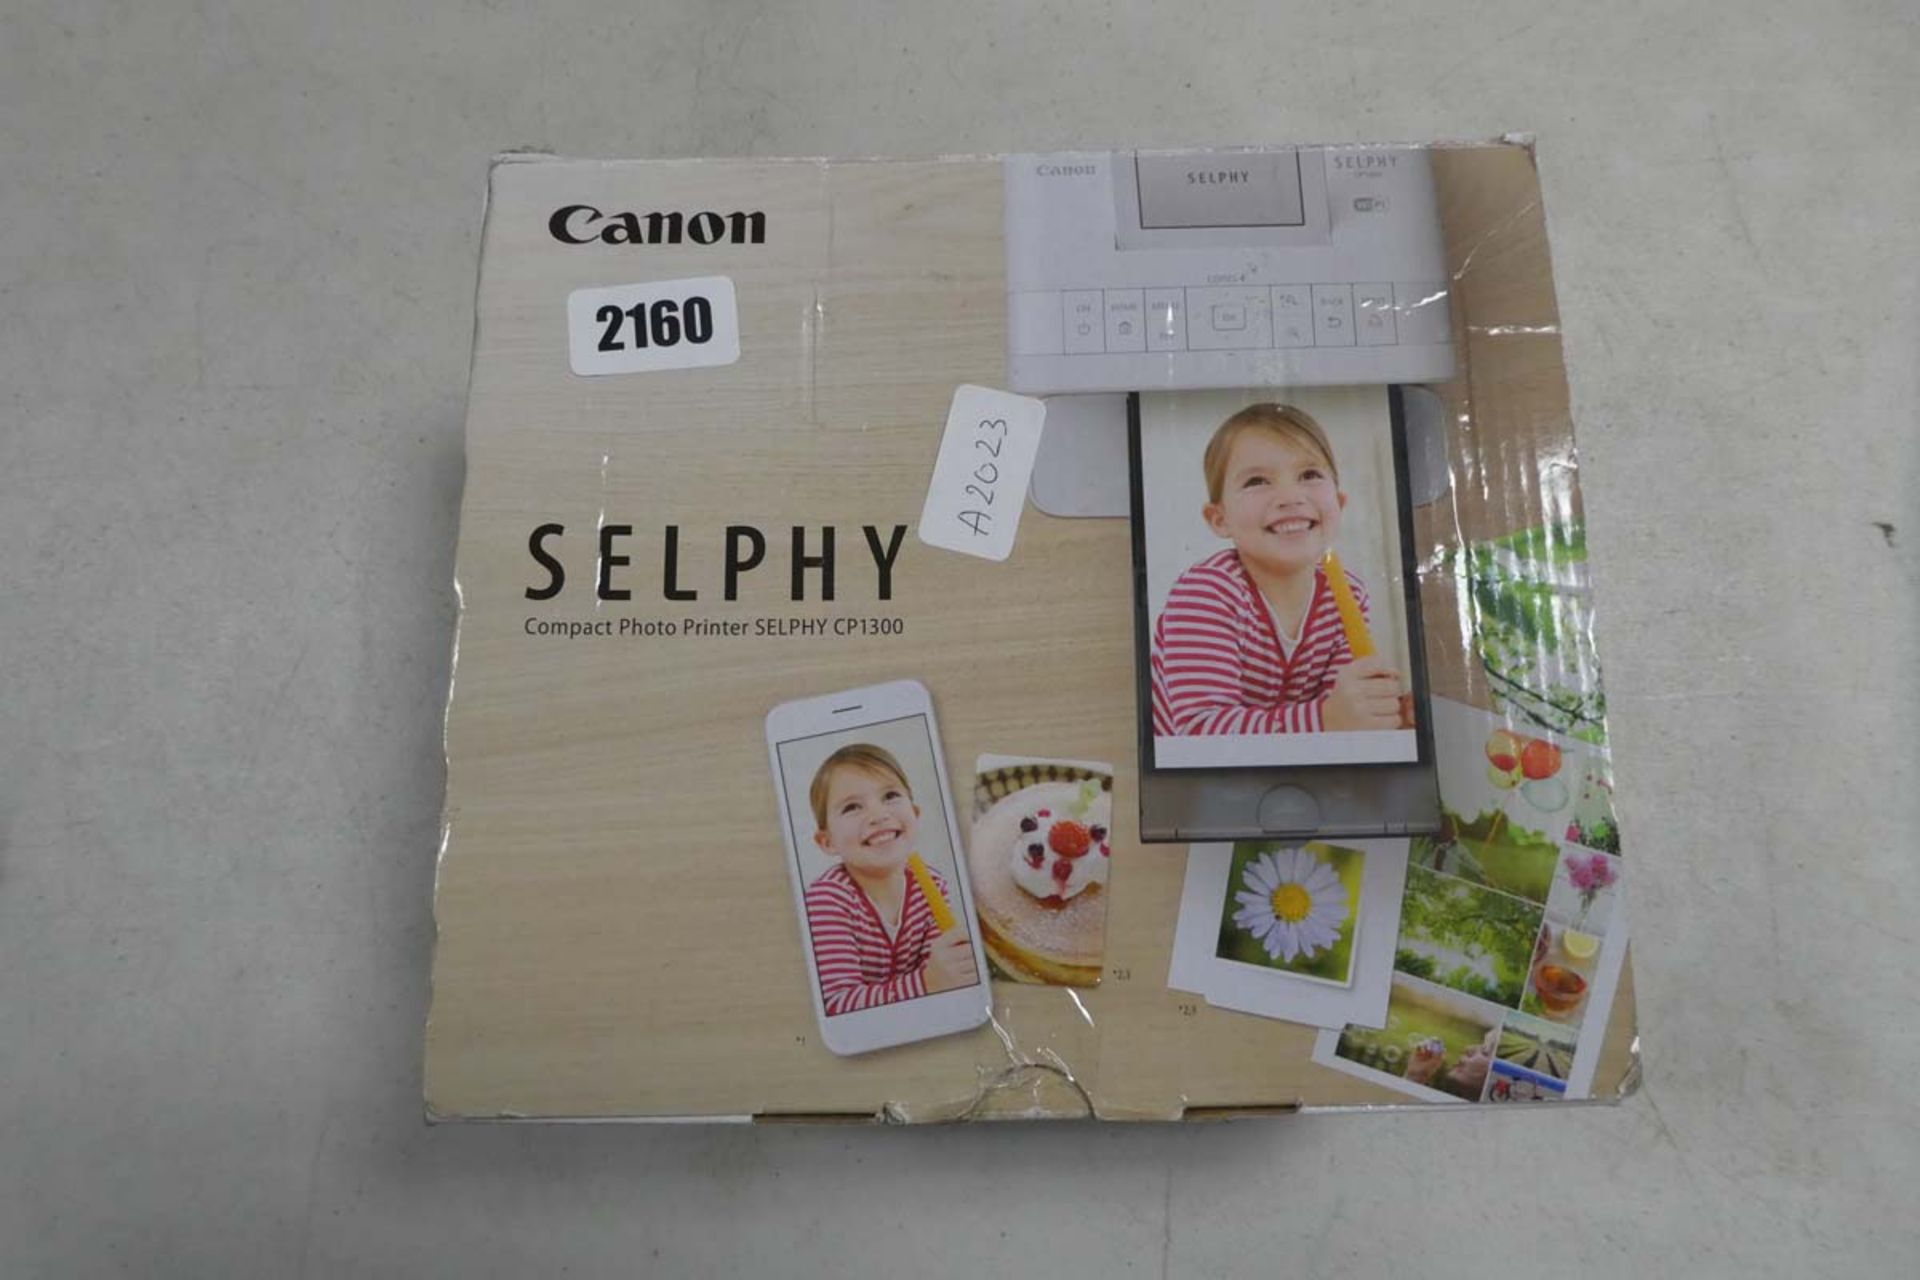 Canon Selphy printer model CP1300